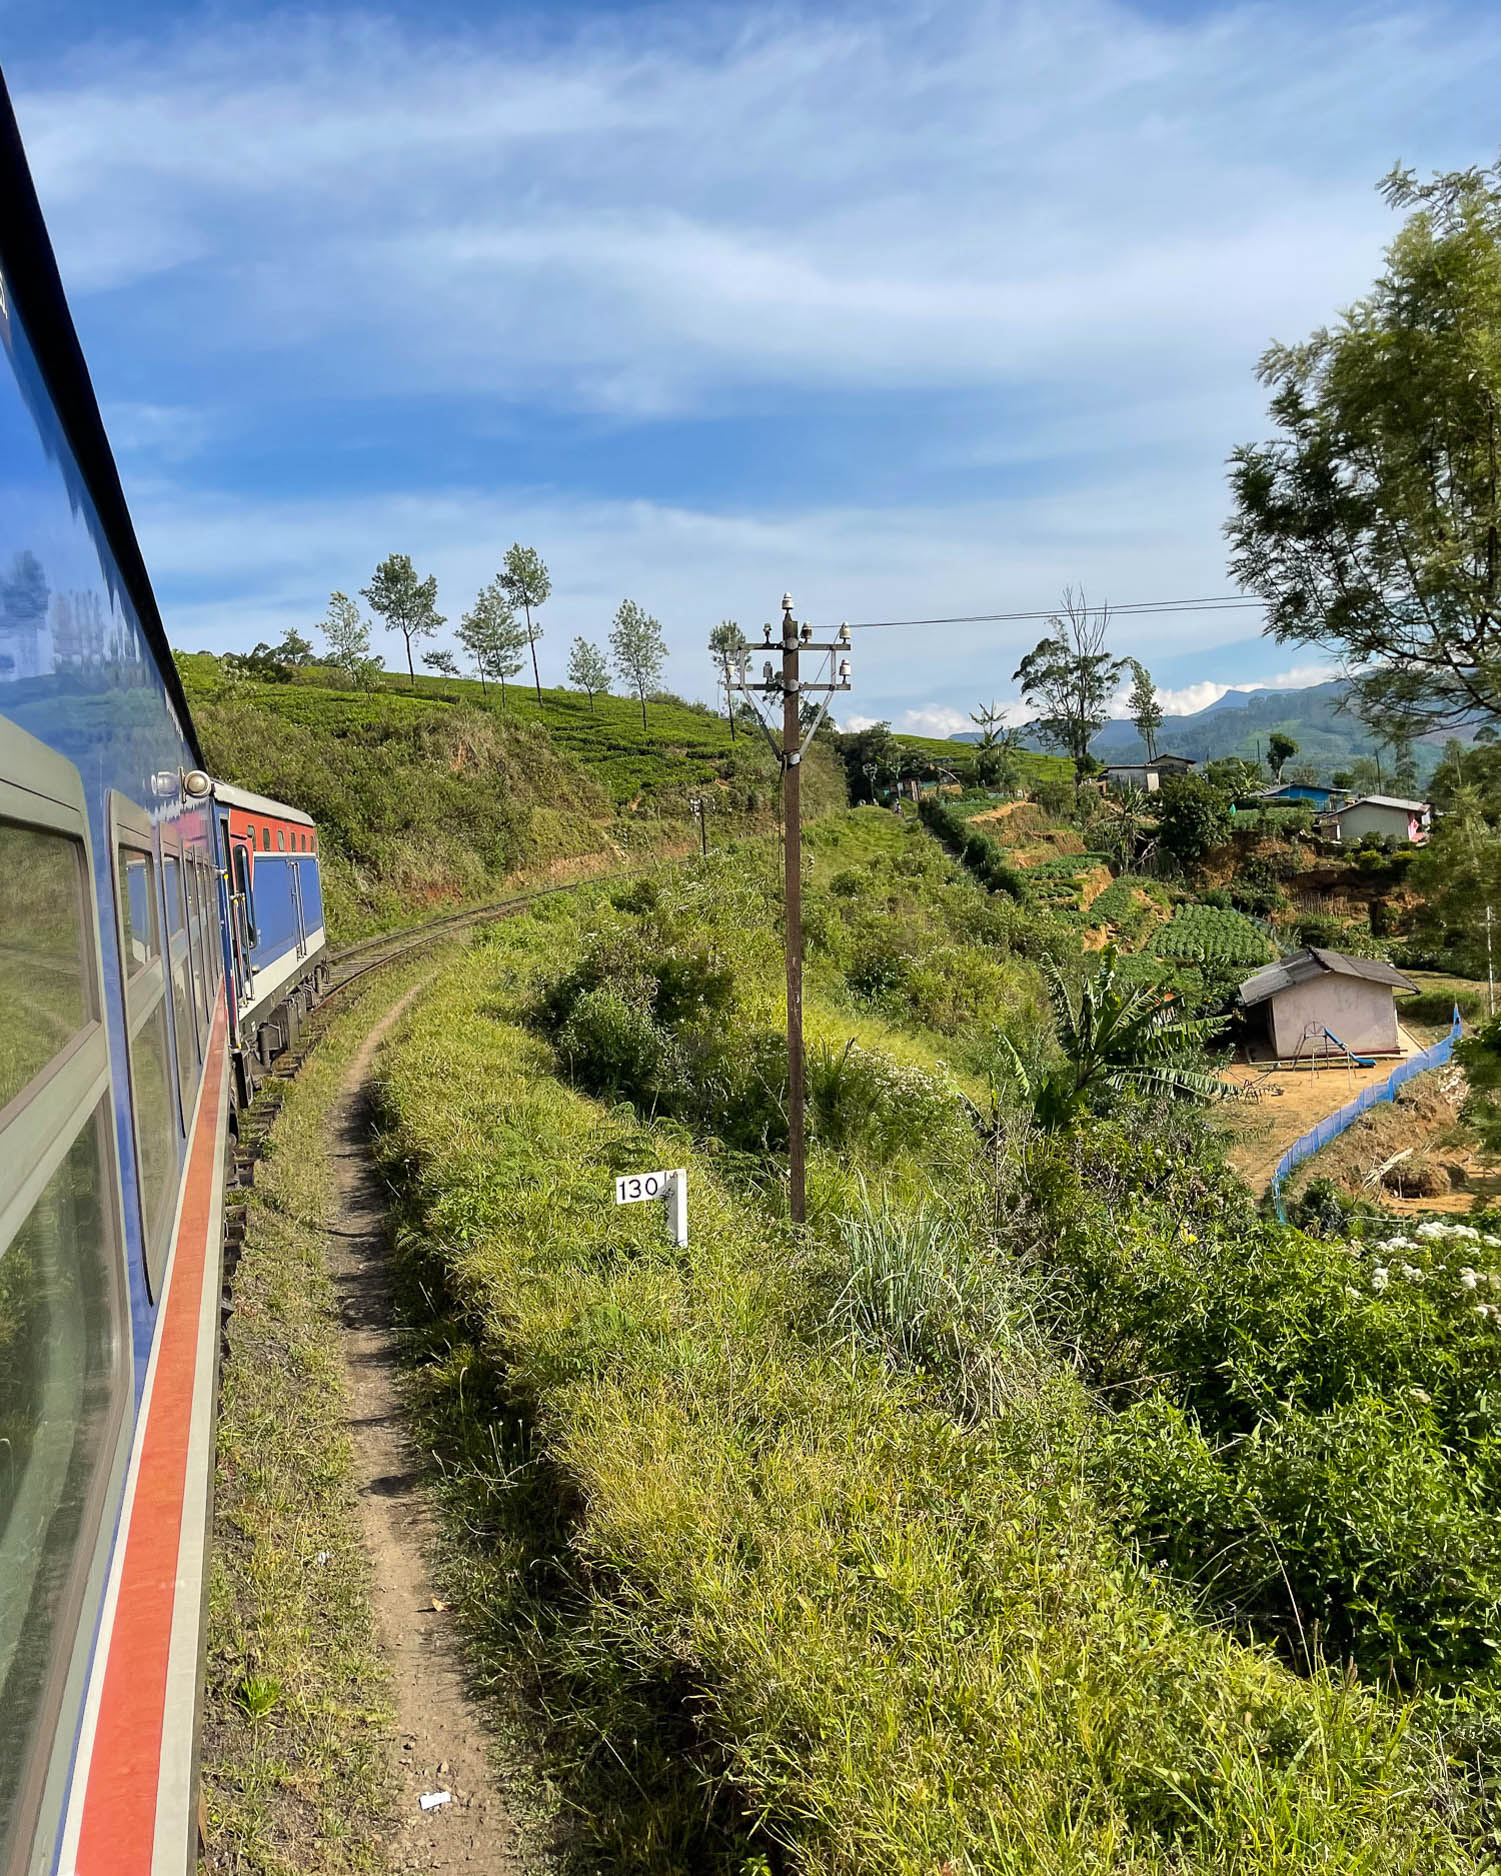 Blue Train to Ella in Sri Lanka Photo Heatheronhertravels.com V